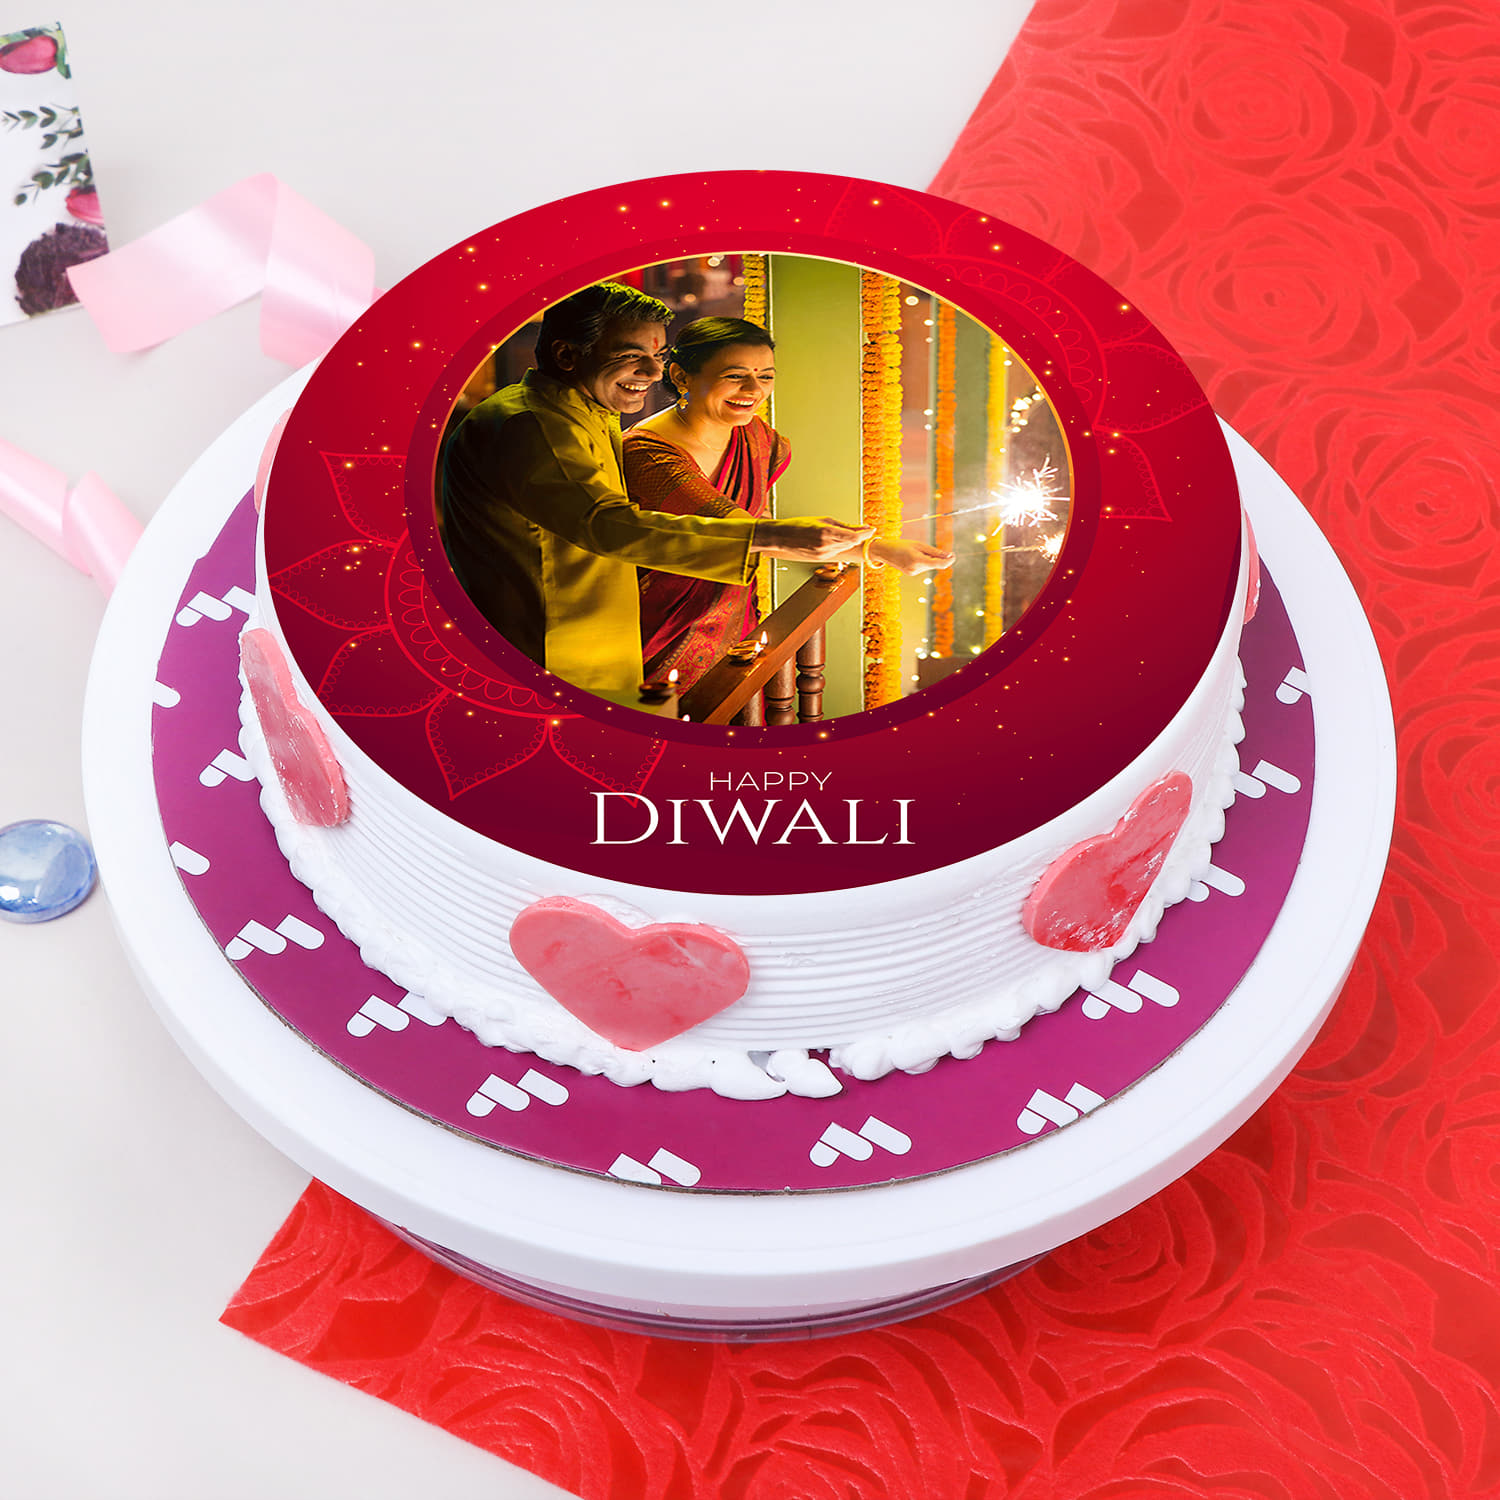 Send Delicious Chocolate Diwali Cake Online - DW19-93600 | Giftalove